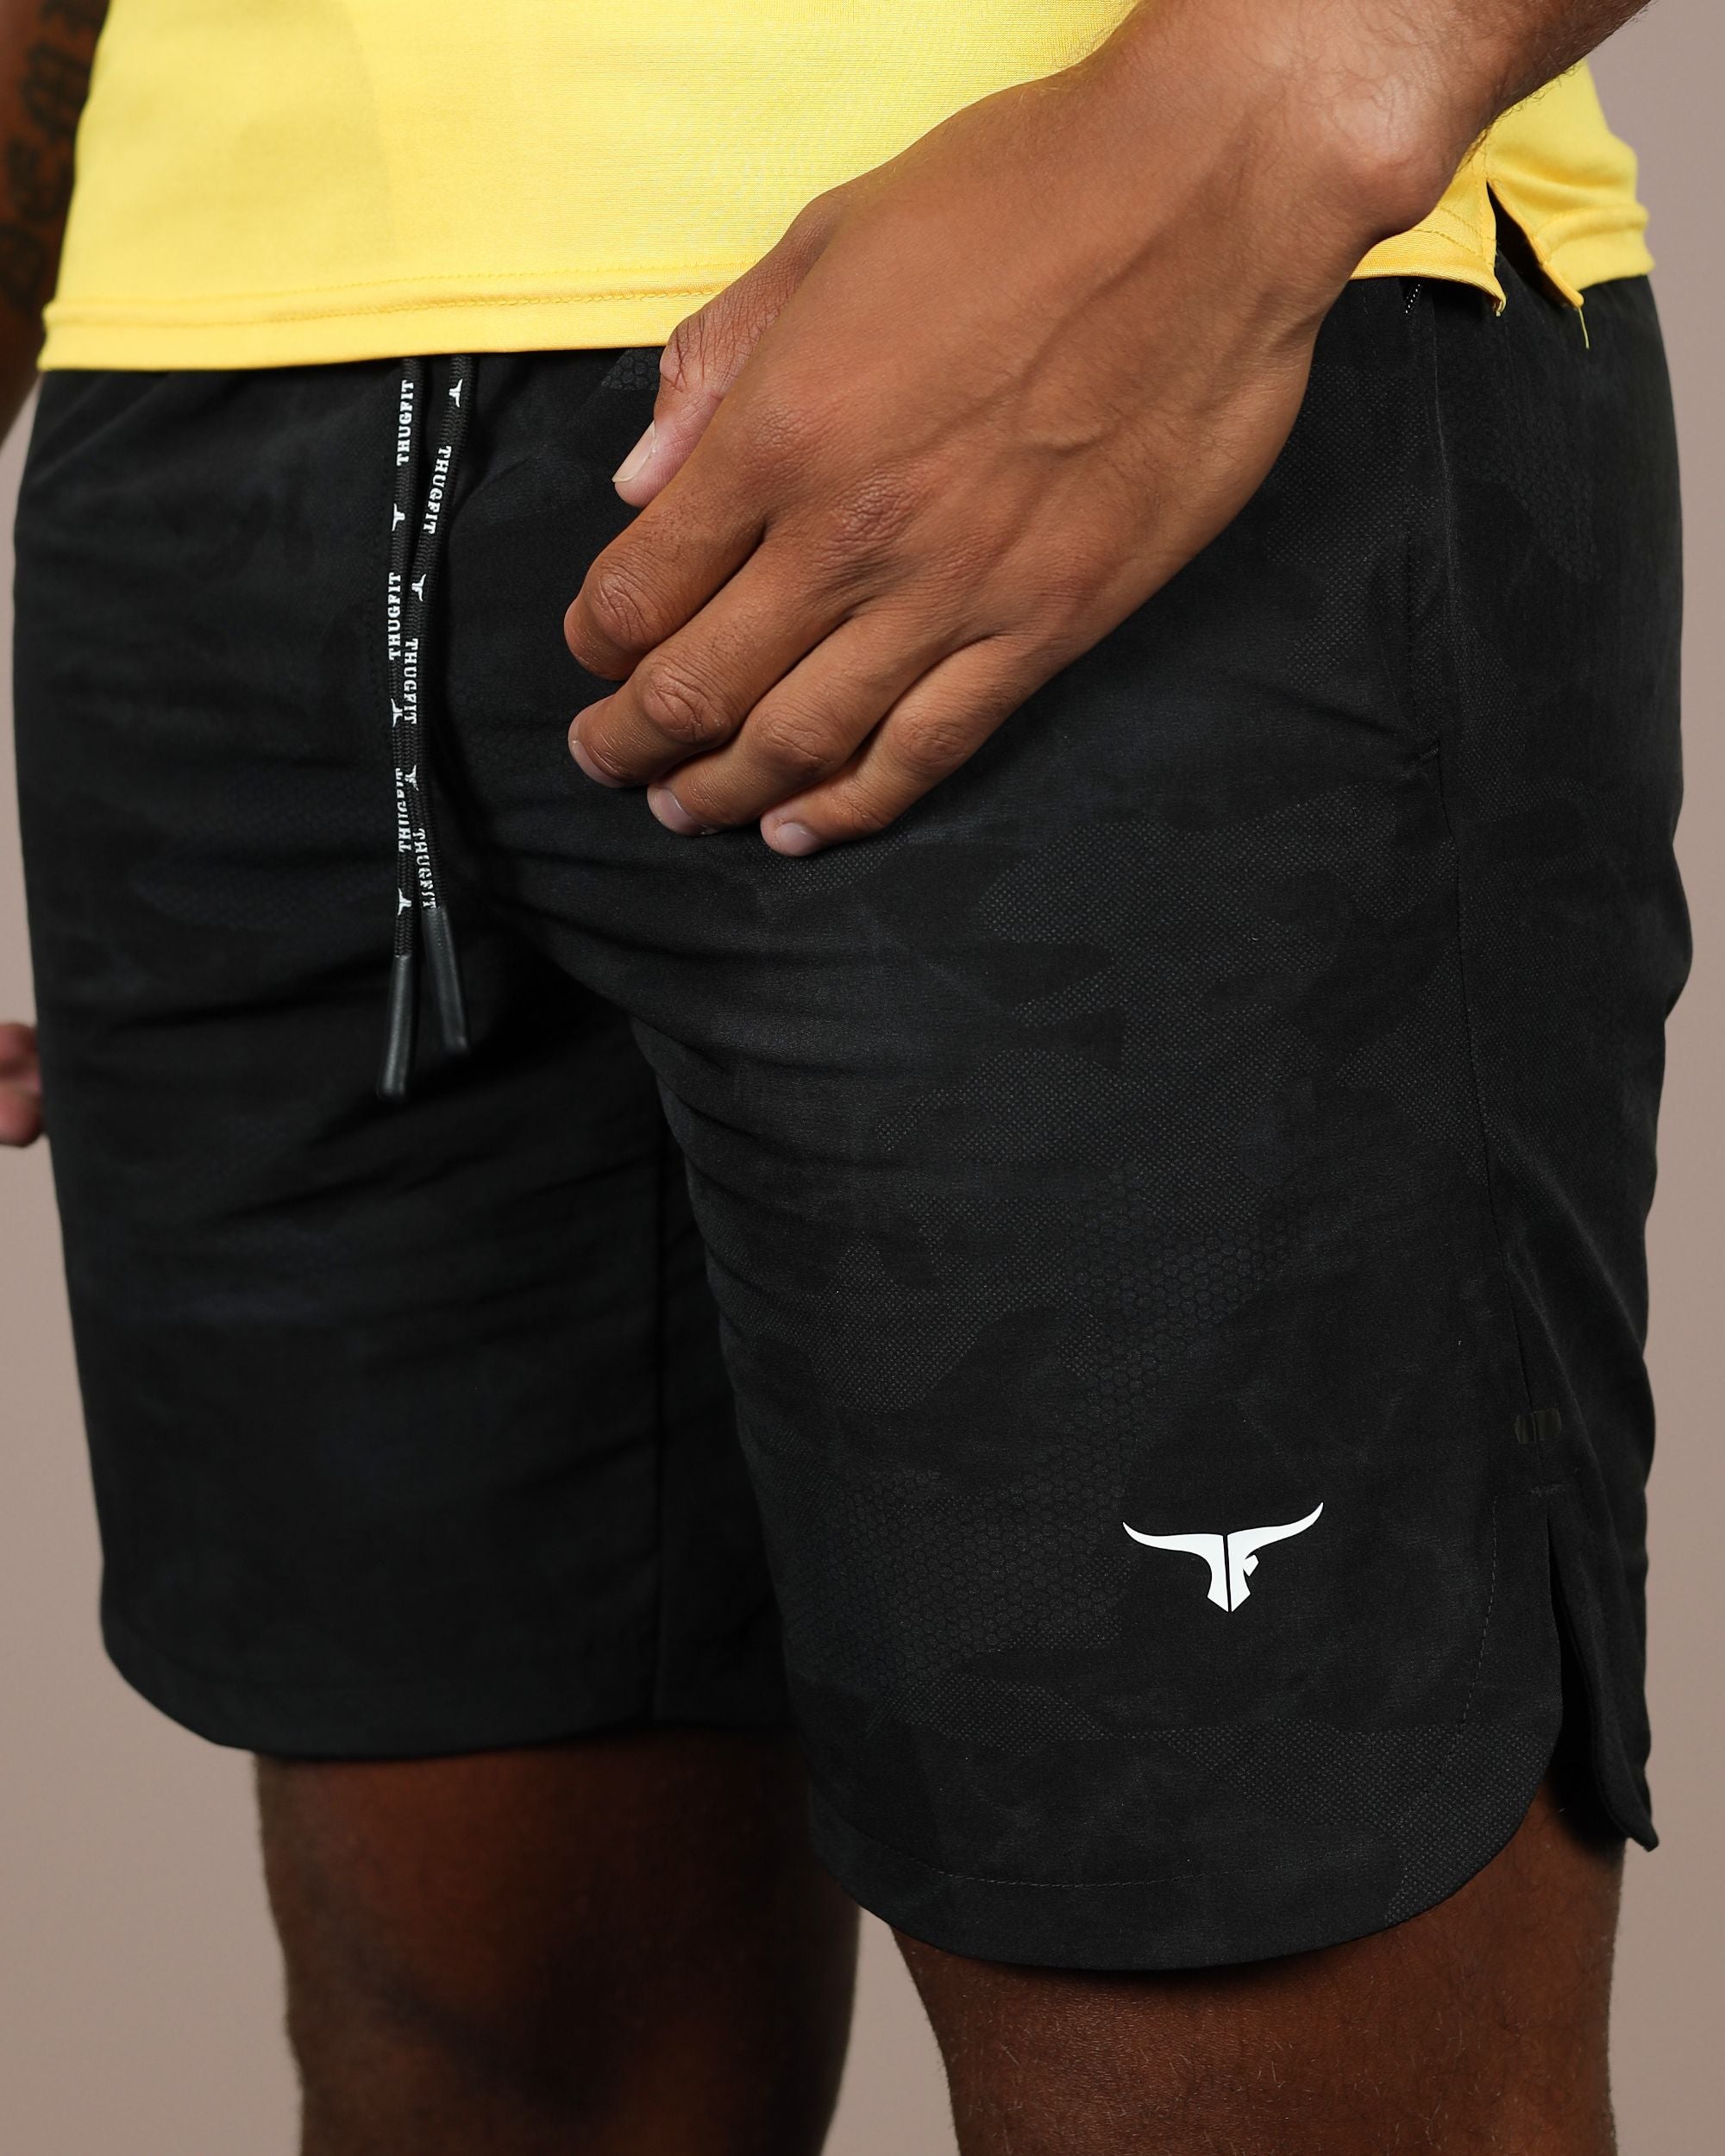 ProTech Activewear Men's Shorts (7" Inseam)- Black